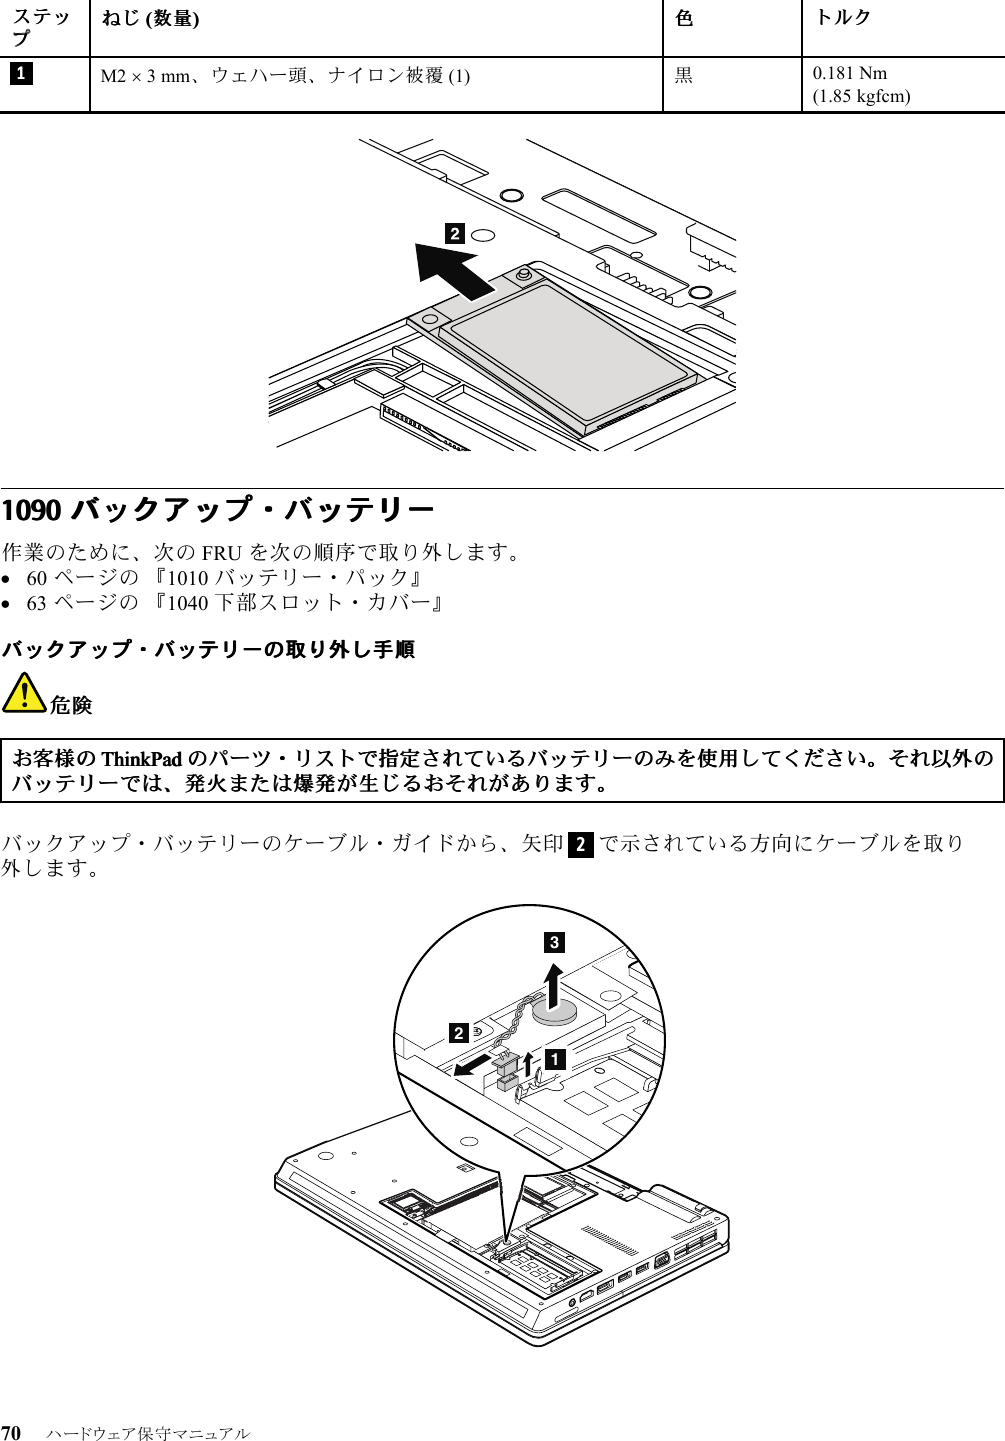 Lenovo 0a 05 J User Manual ハードウエア メンテナンス マニュアル Edge E5 Think Pad